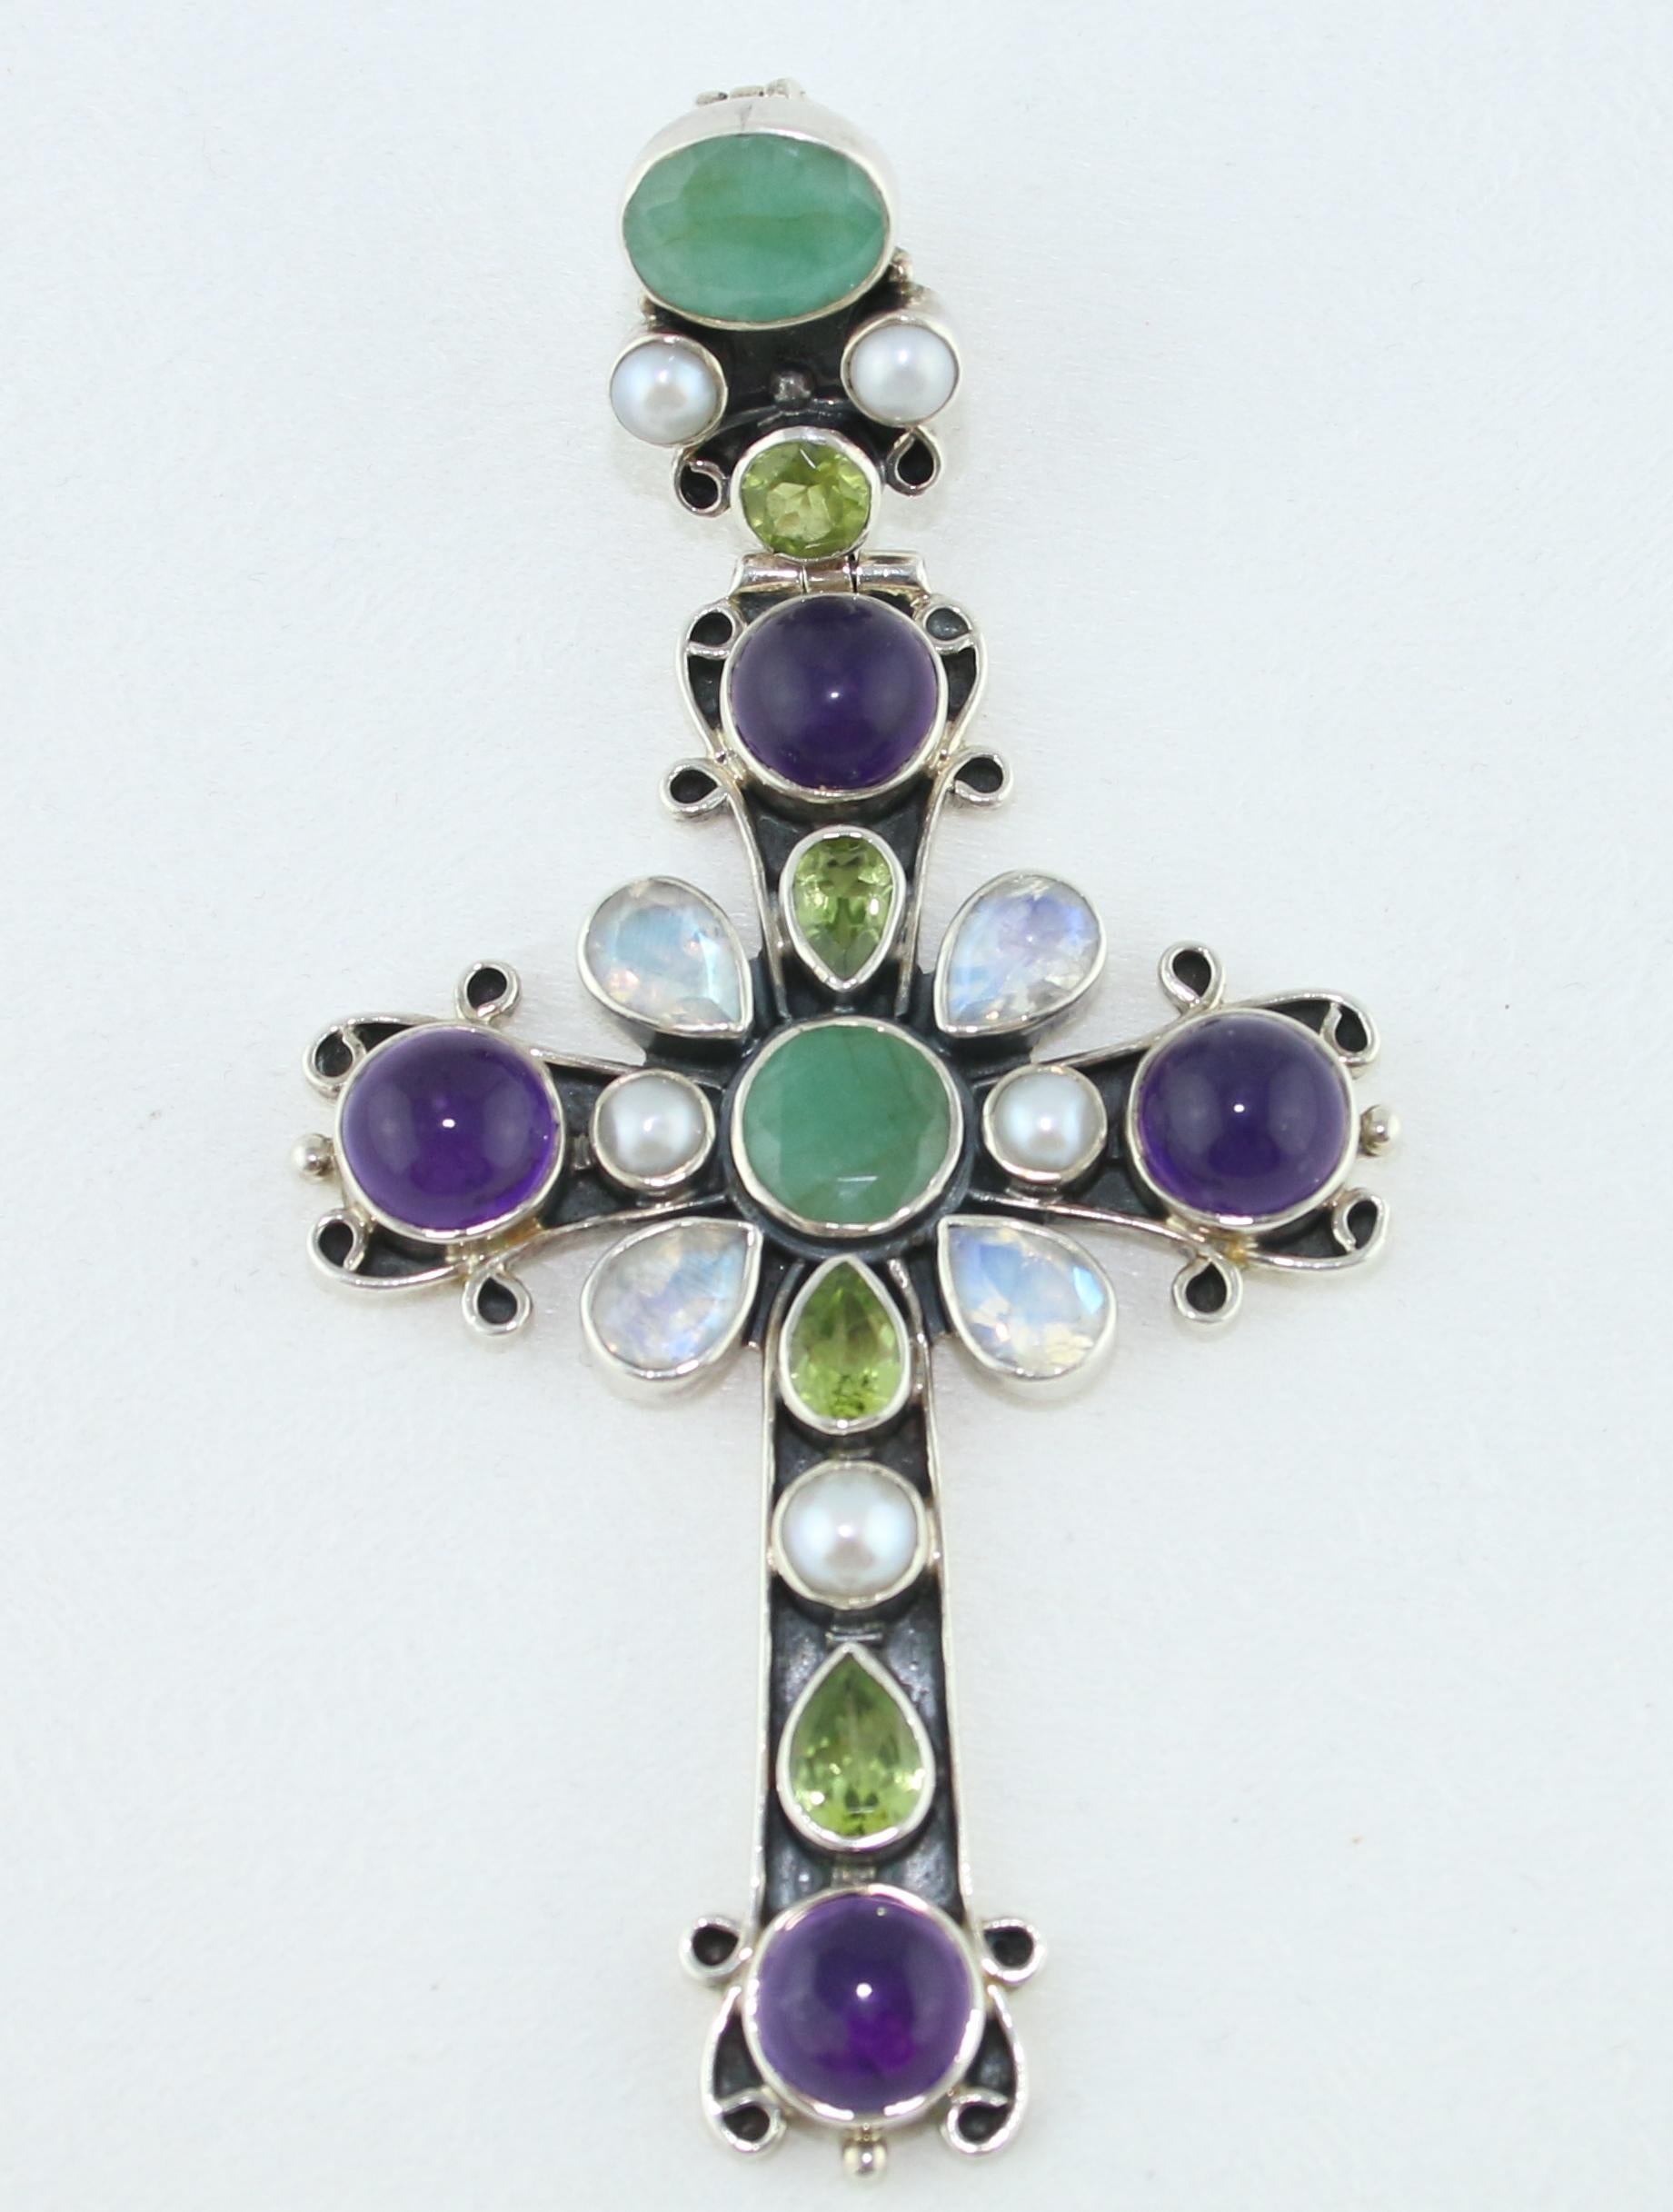 Contemporary Ornate Multi-Gem Sterling Silver Large Cross Pendant